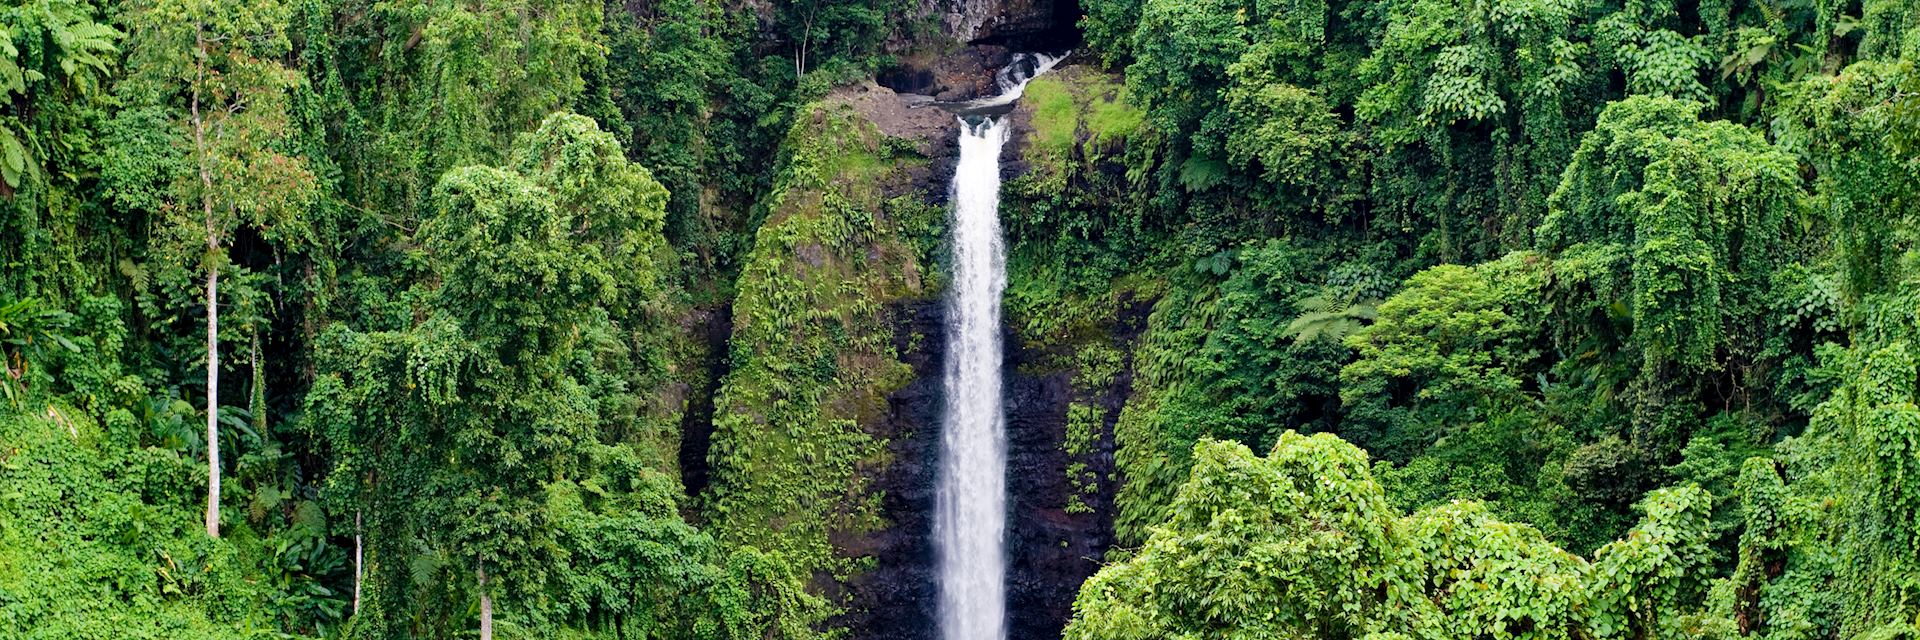 Samoan waterfall